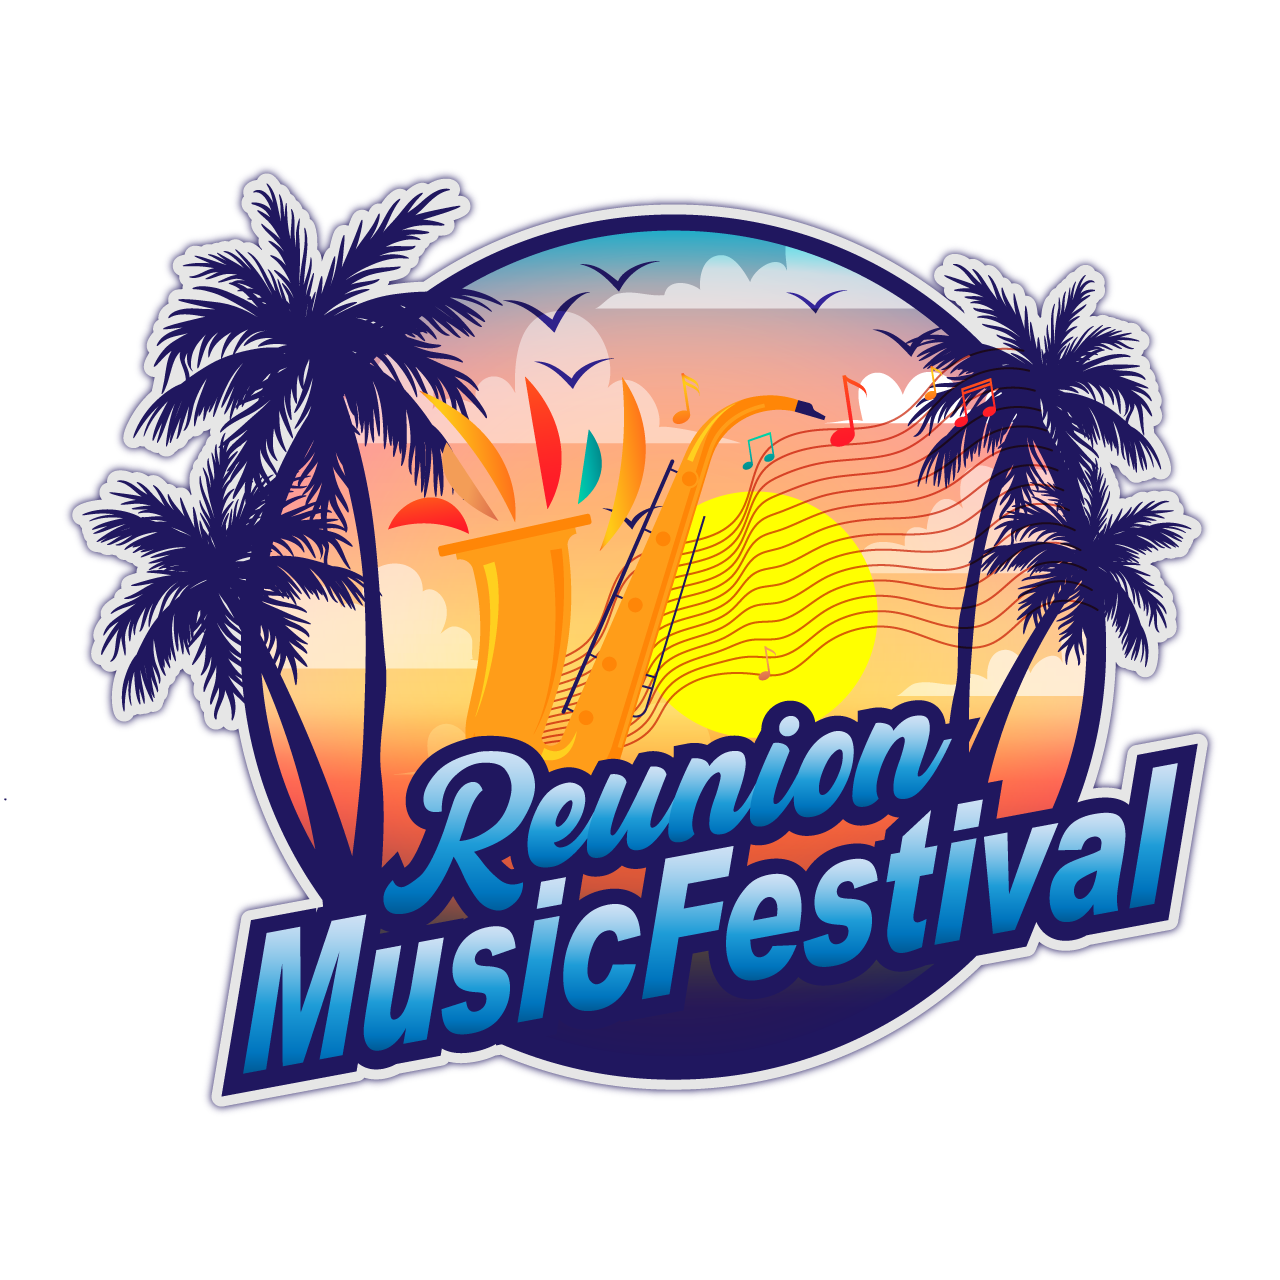 Positive Vibes Musicians Movement The Reunion Music Festival An